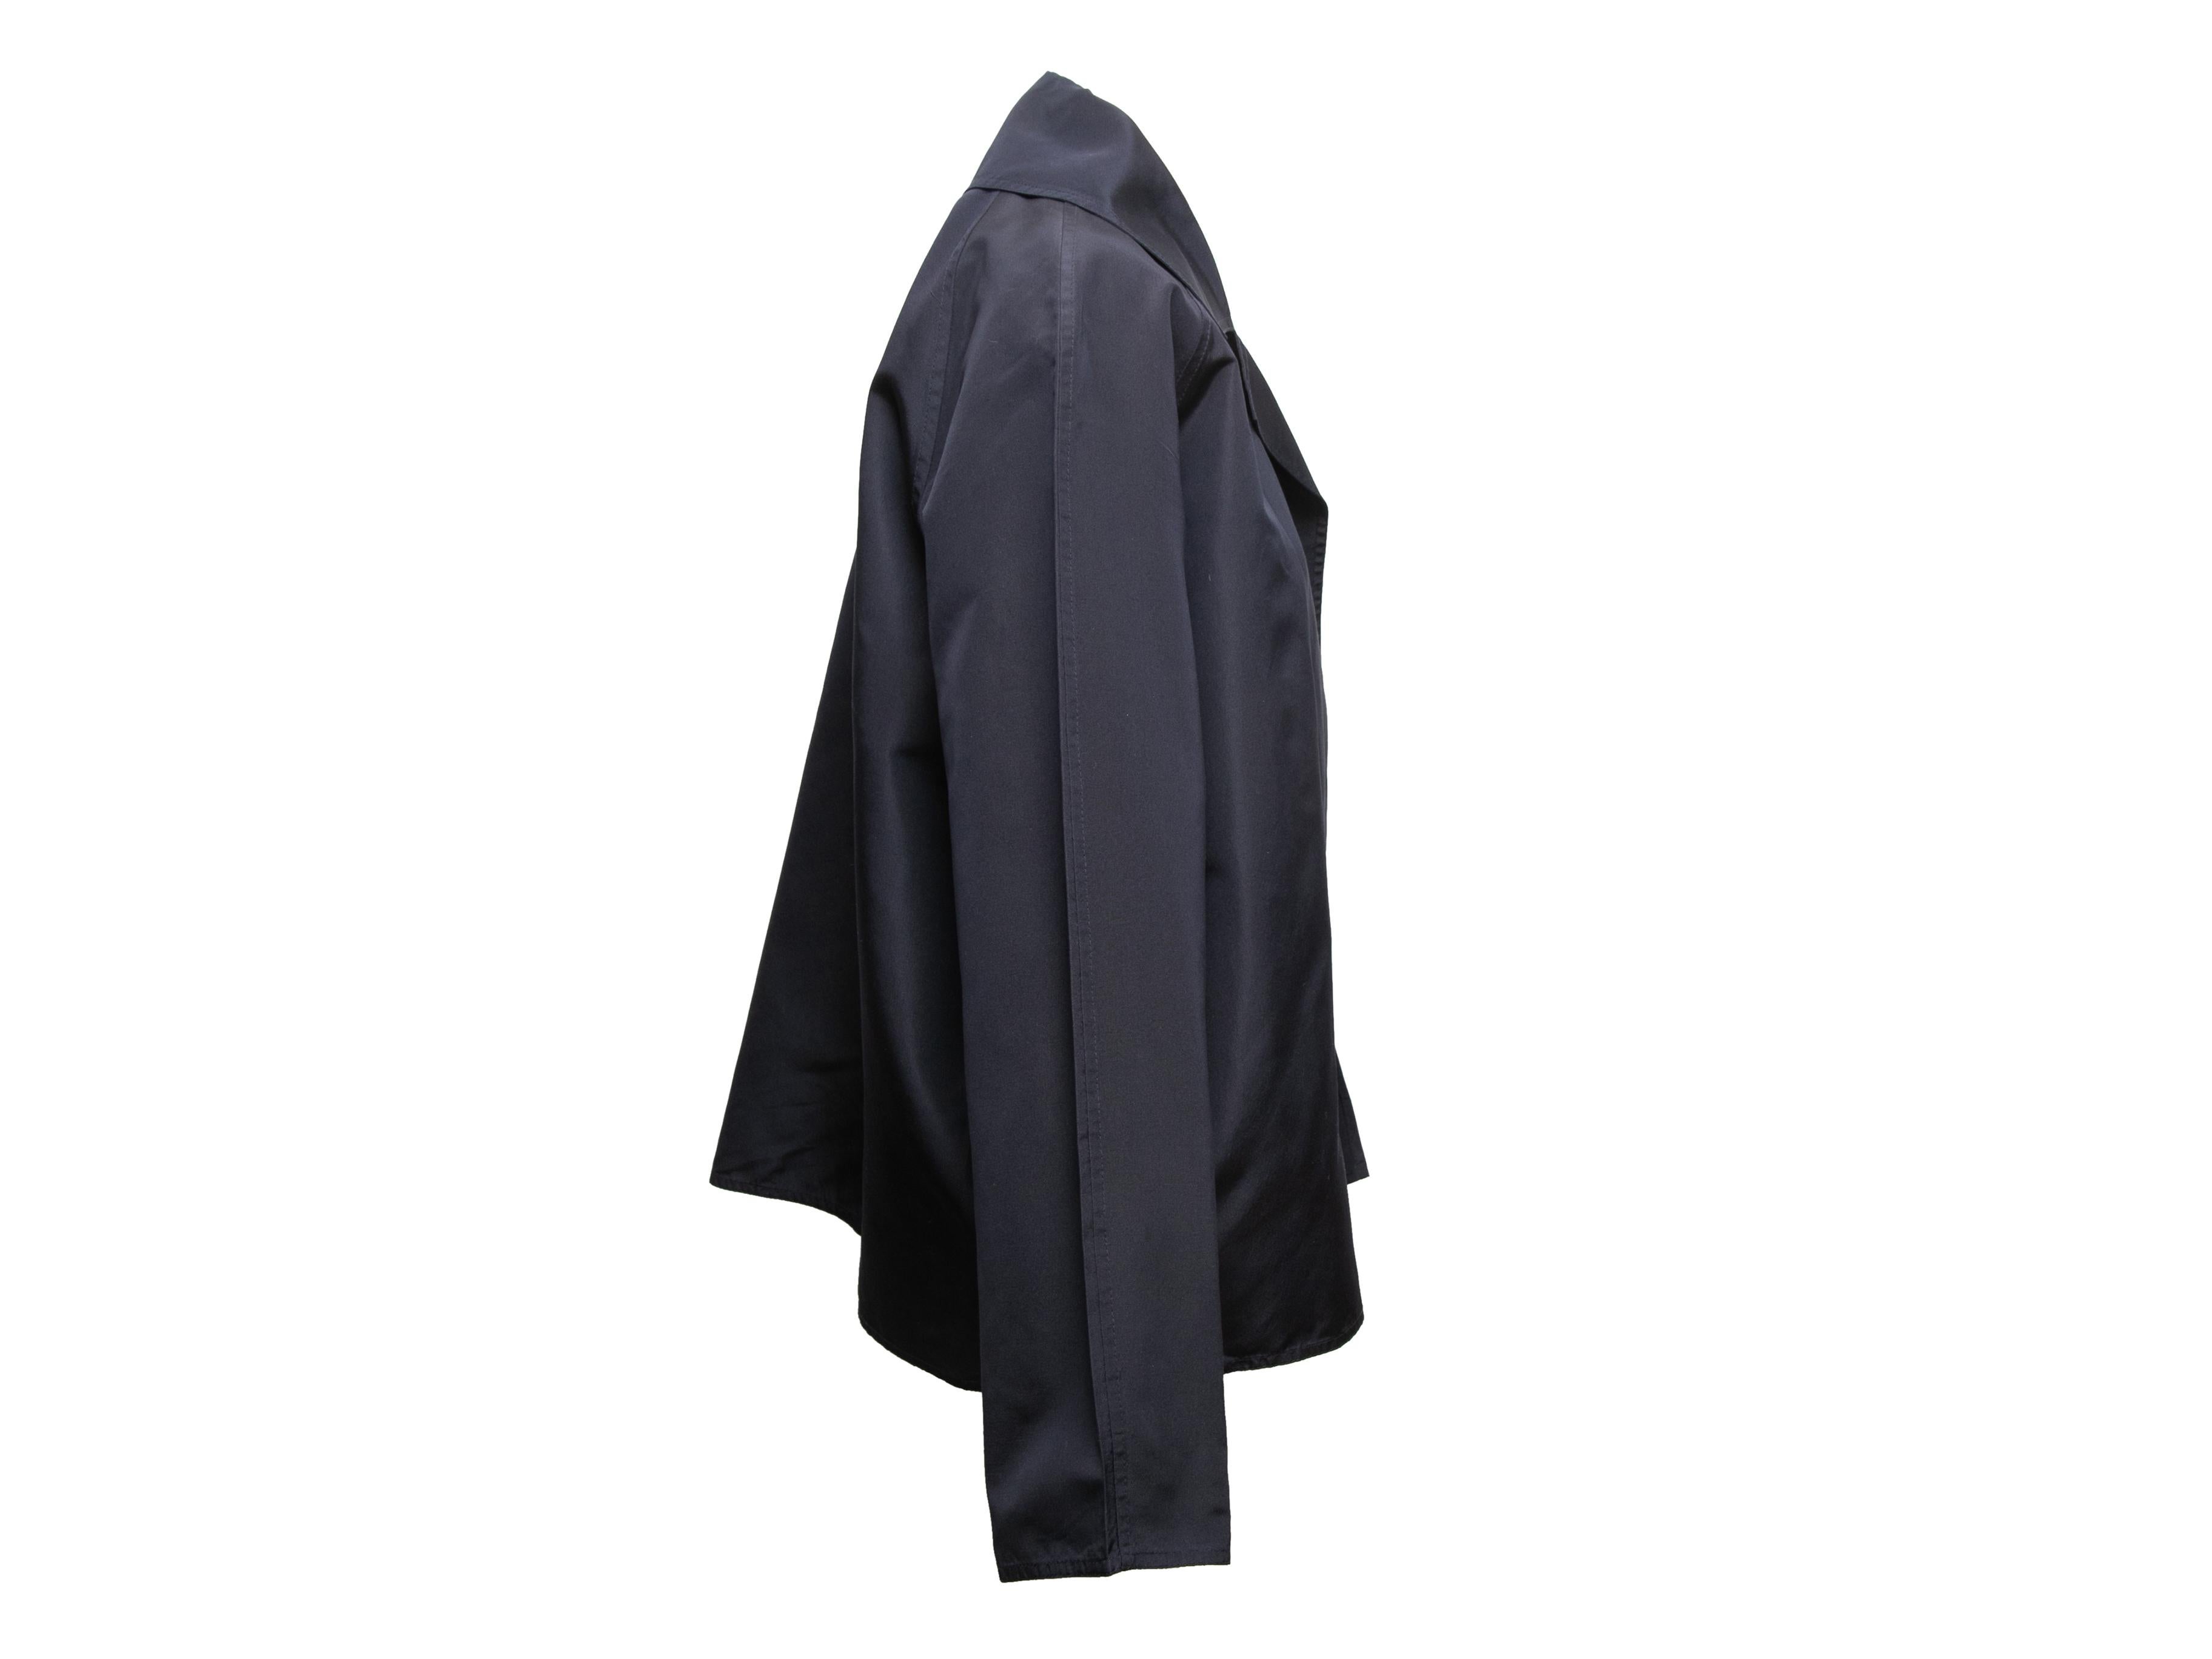 Navy silk taffeta jacket by Zoran. Pointed collar. Open front. 40